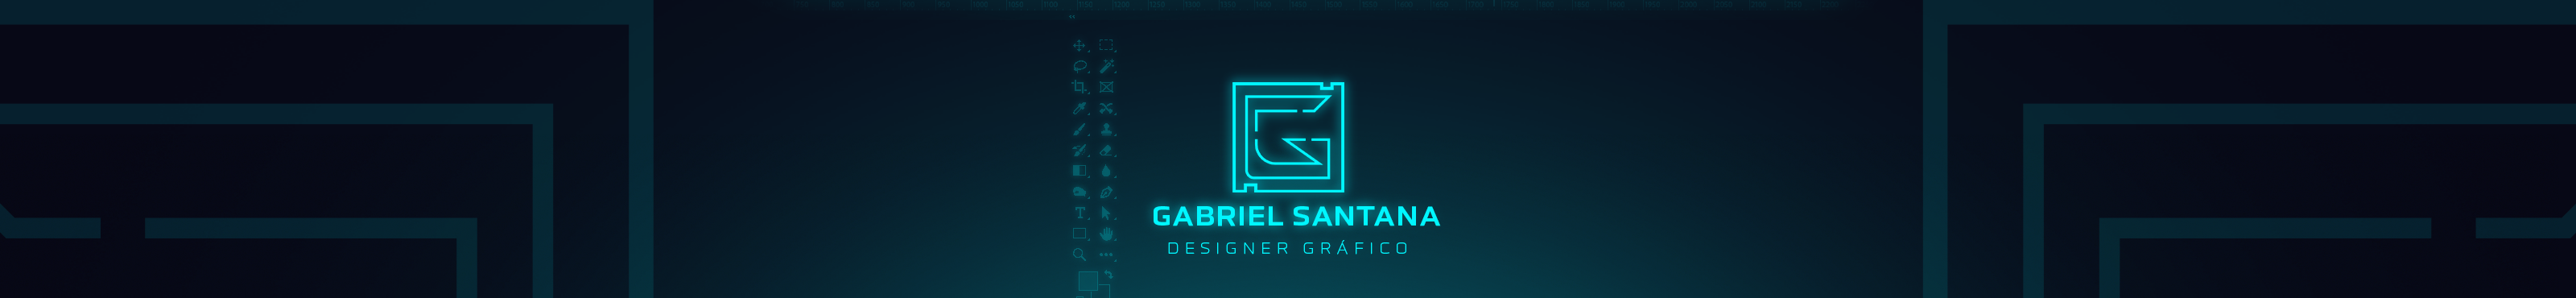 Gabriel Santana's profile banner